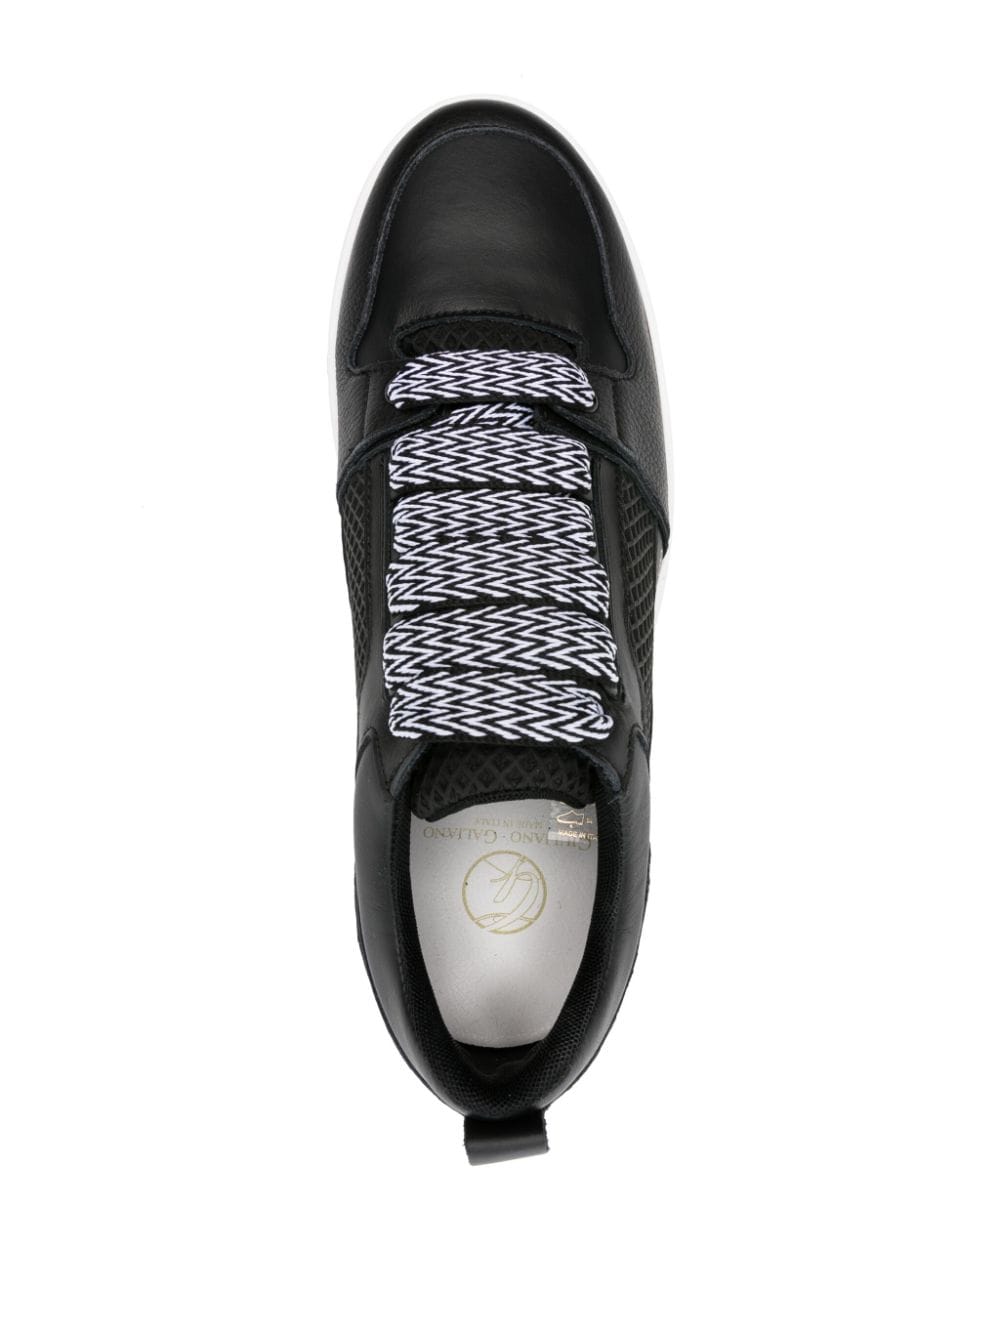 Giuliano Galiano Vyper logo-print Leather Sneakers - Grey